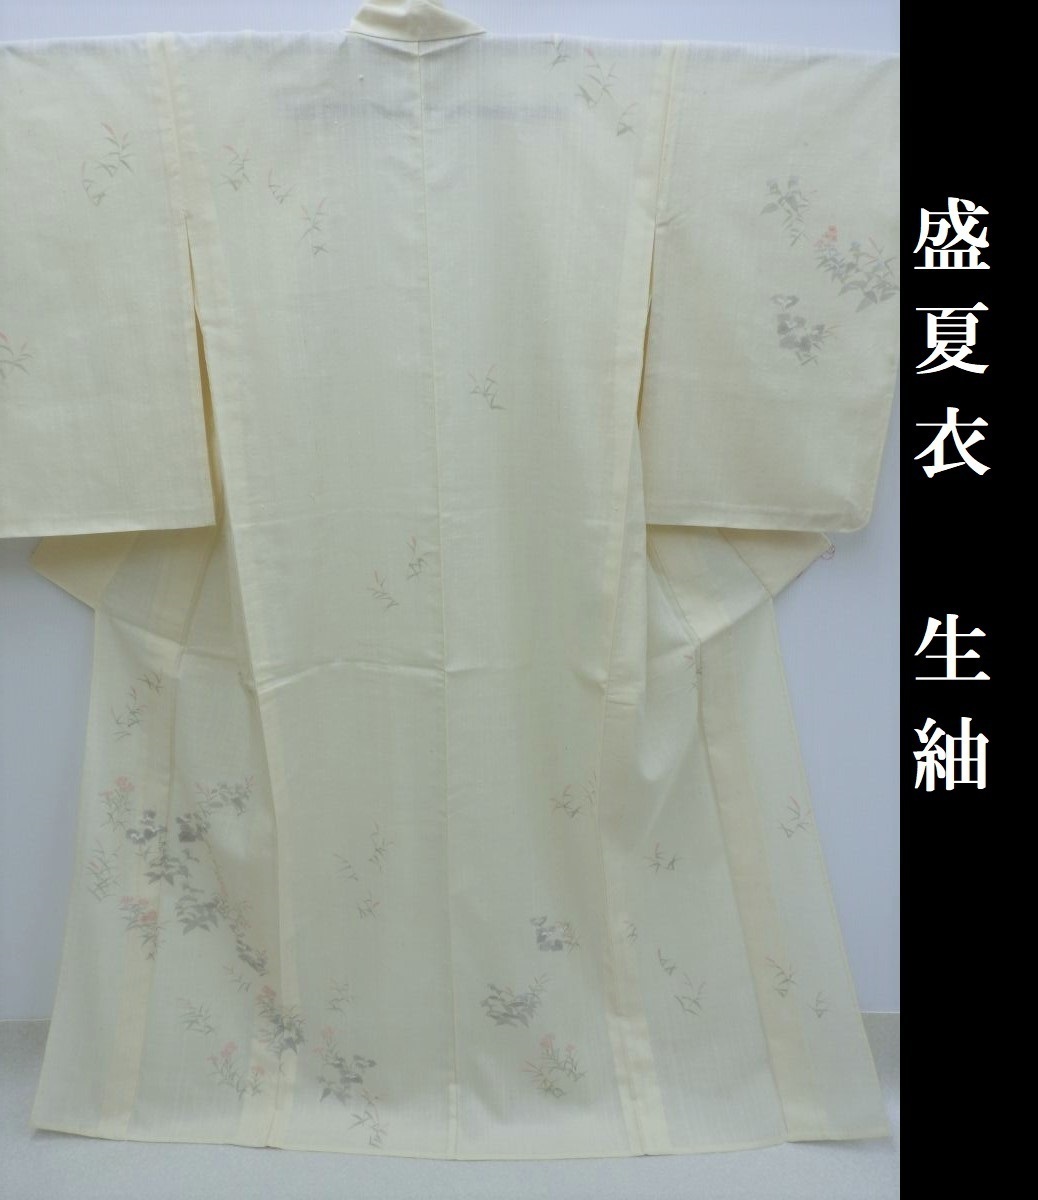 Club wisteria★ropa de visita de verano, pongee crudo, pintado a mano teñido, patrón de flores, a medida (3156)*, kimono de mujer, kimono, vestido de visita, A medida